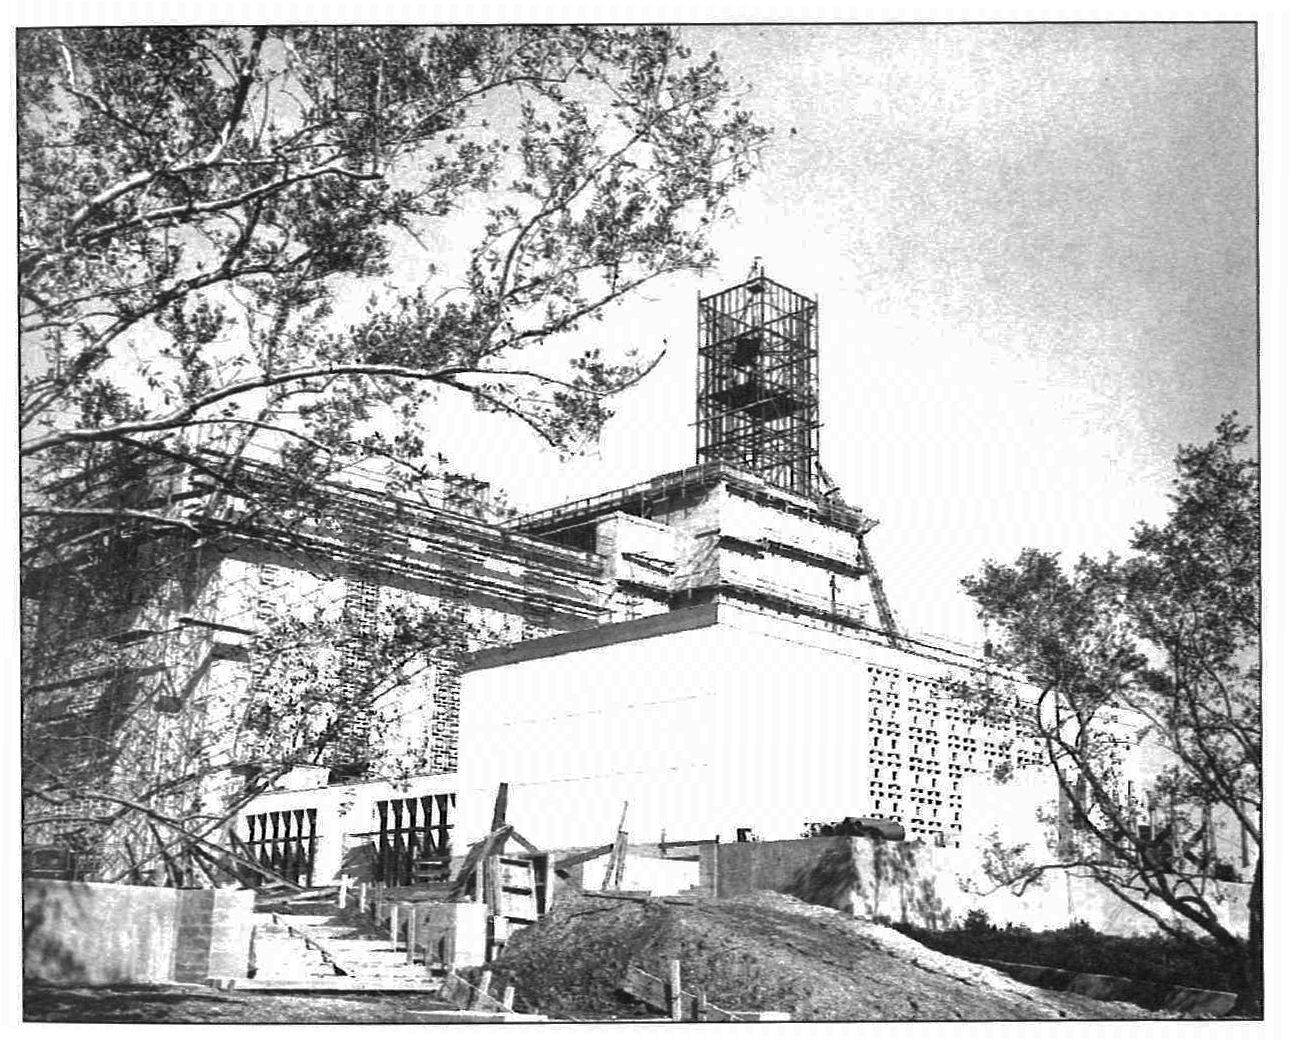 Los Angeles Temple under construction